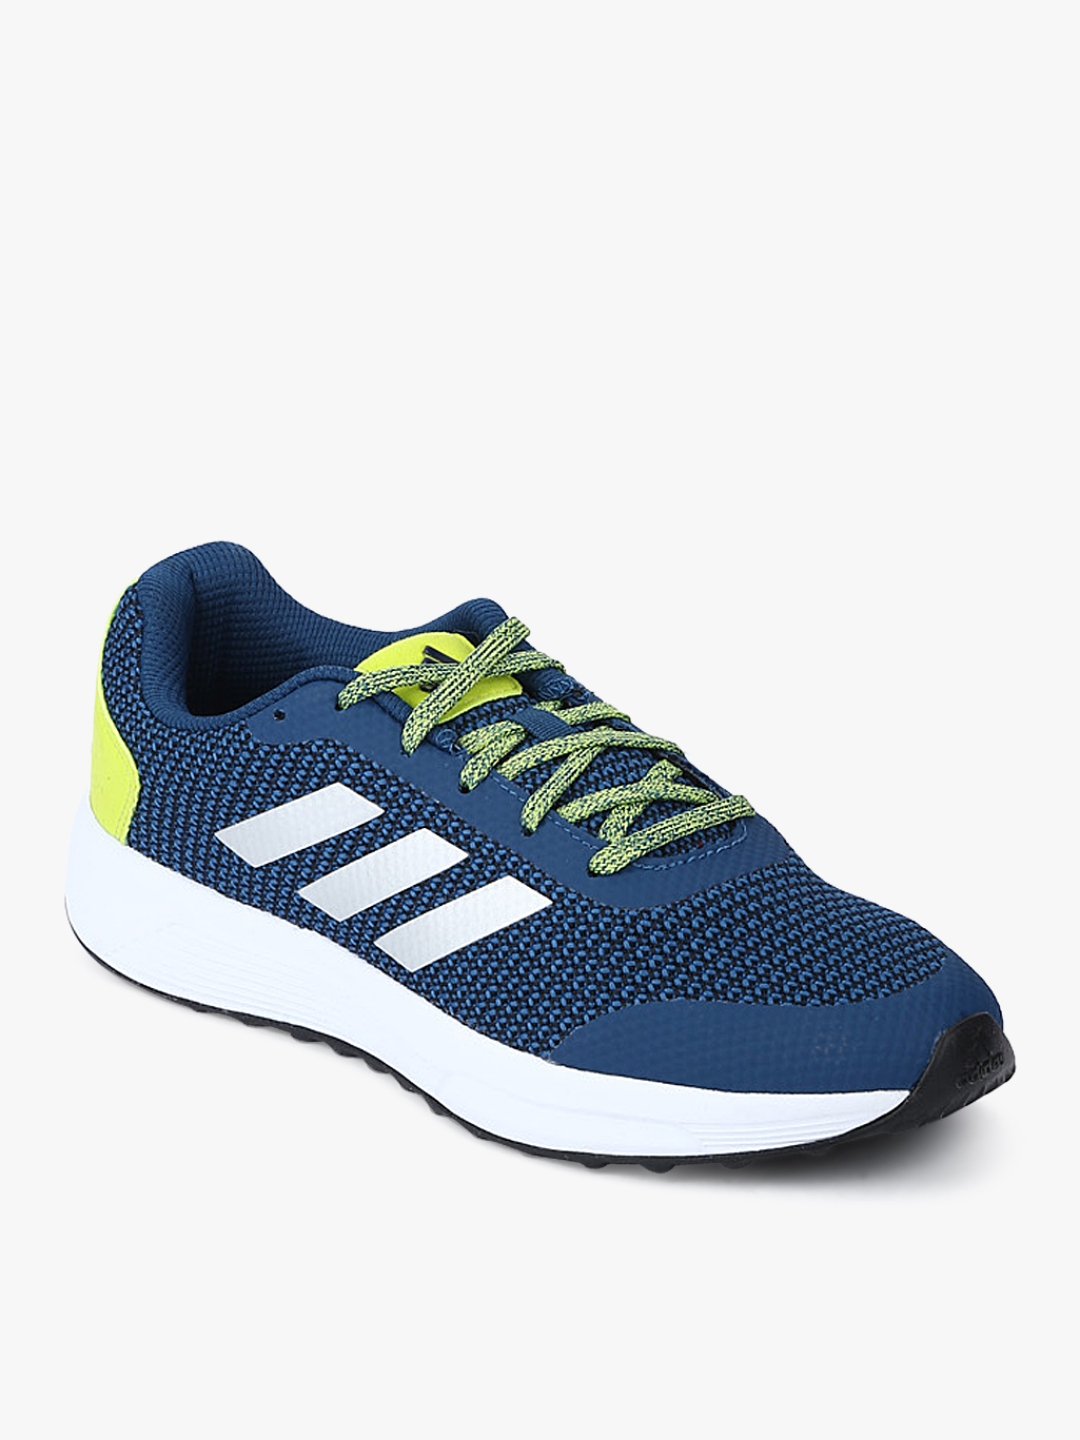 Buy Helkin 3 Blue Running Shoes - Sports Shoes for Men 7634614 | Myntra